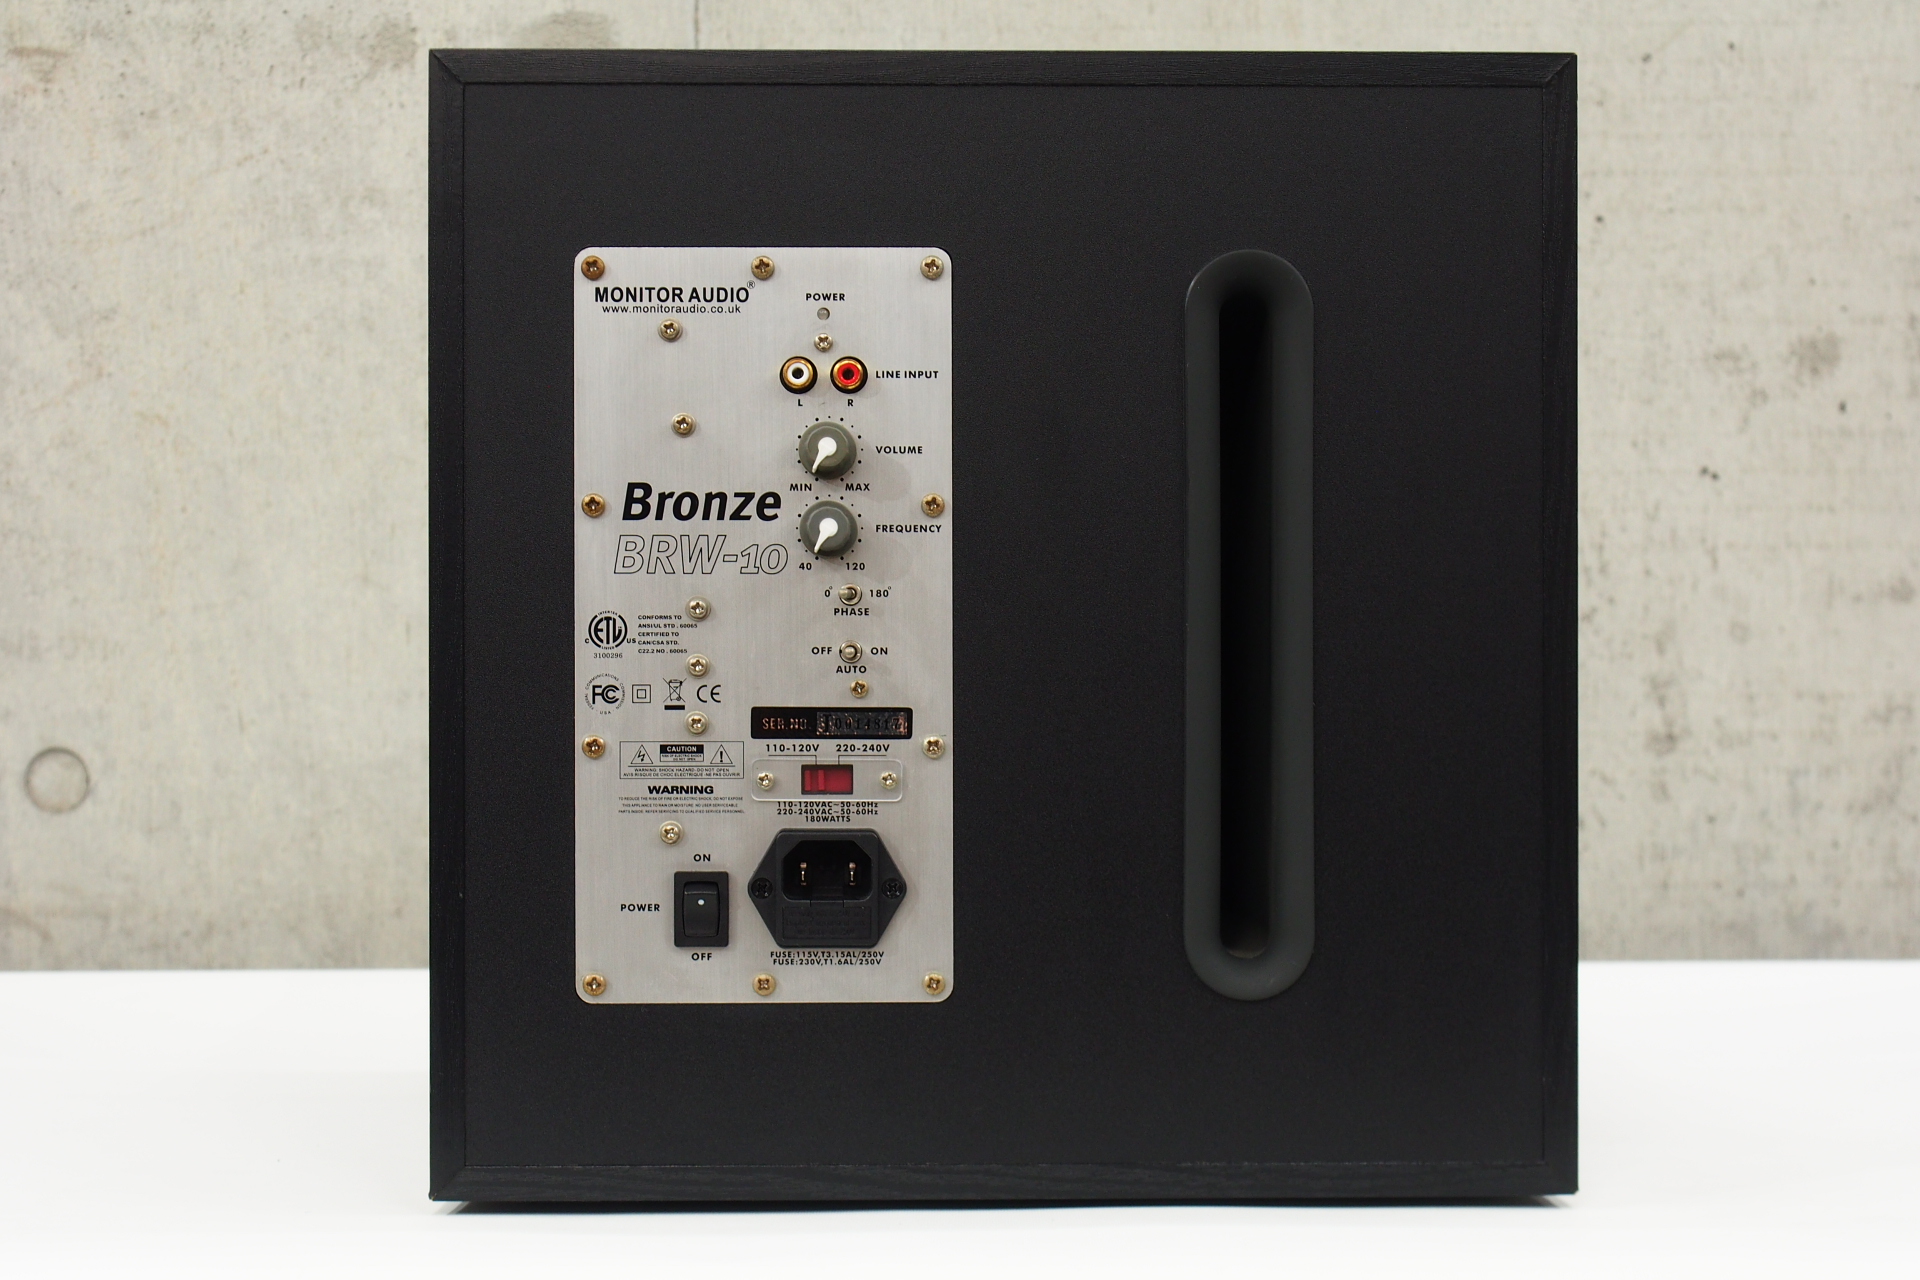 MONITOR AUDIO Bronze BRW-10 サブウーハー 音出し確認済 電源コード非純正 裏のゴムにベタツキ有 ACBF 品 - オーディオ 機器